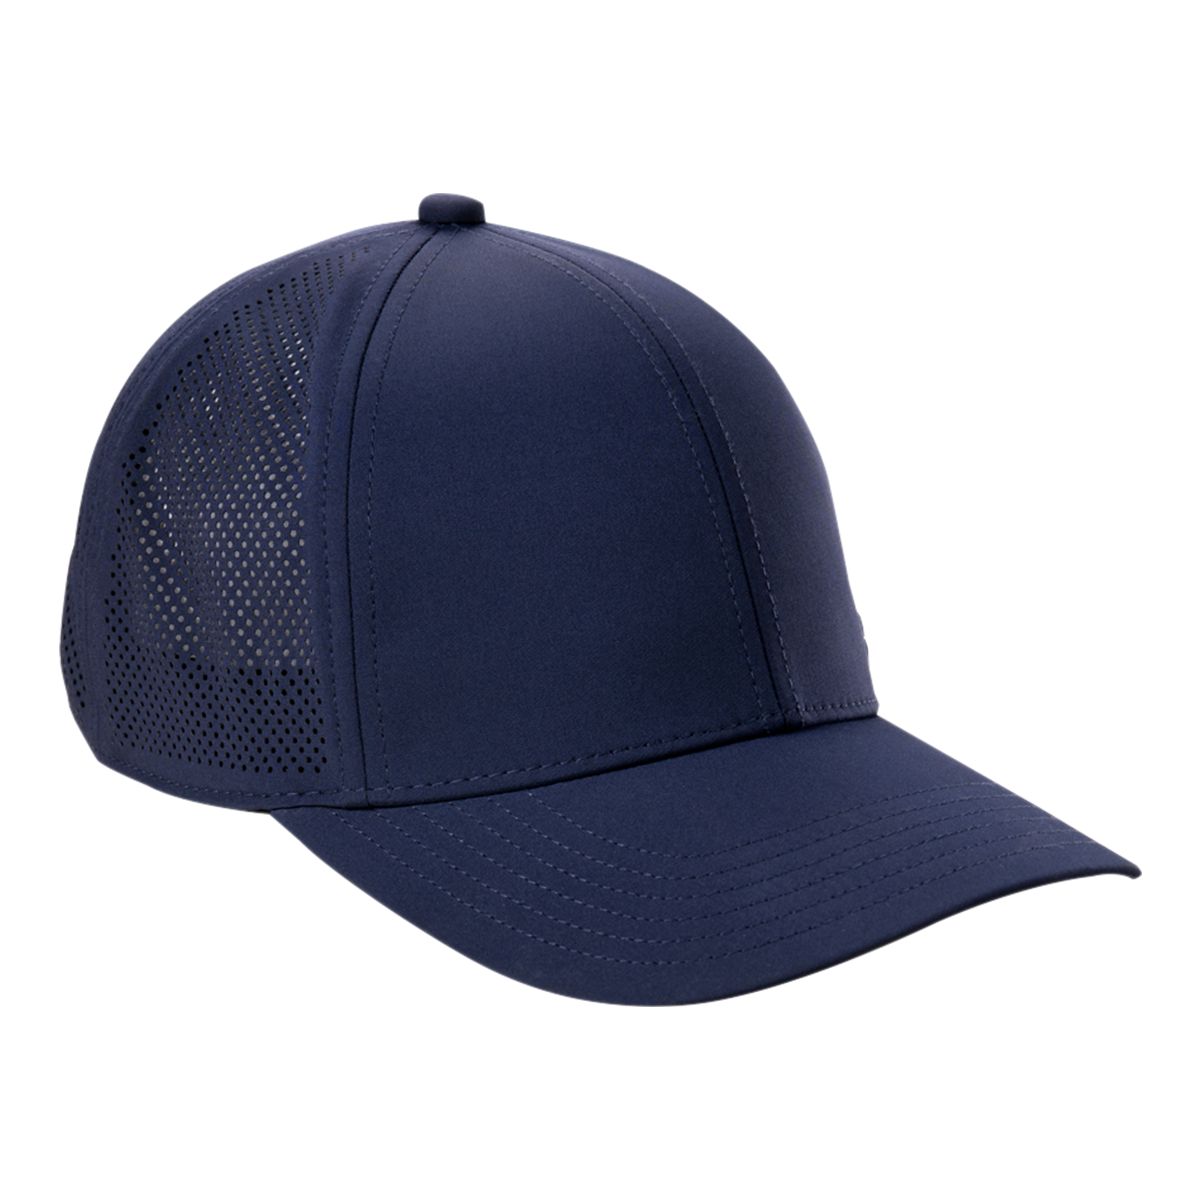 Image of Black Clover Women's Sleek Luck Adjustable Golf Hat